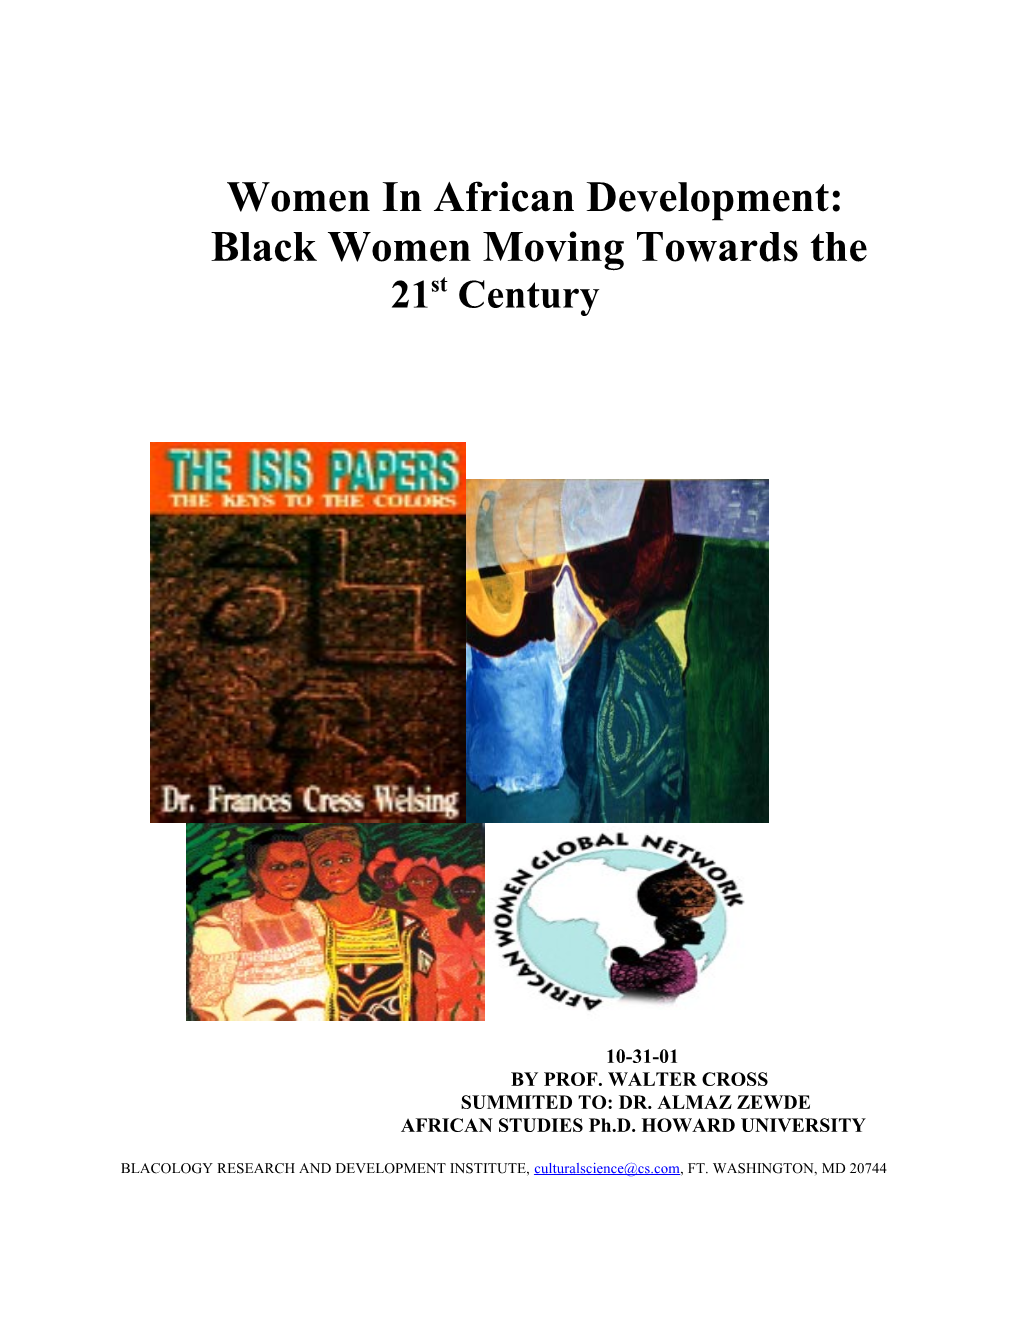 Black Women 2Lst C:Entury Moving Towards The